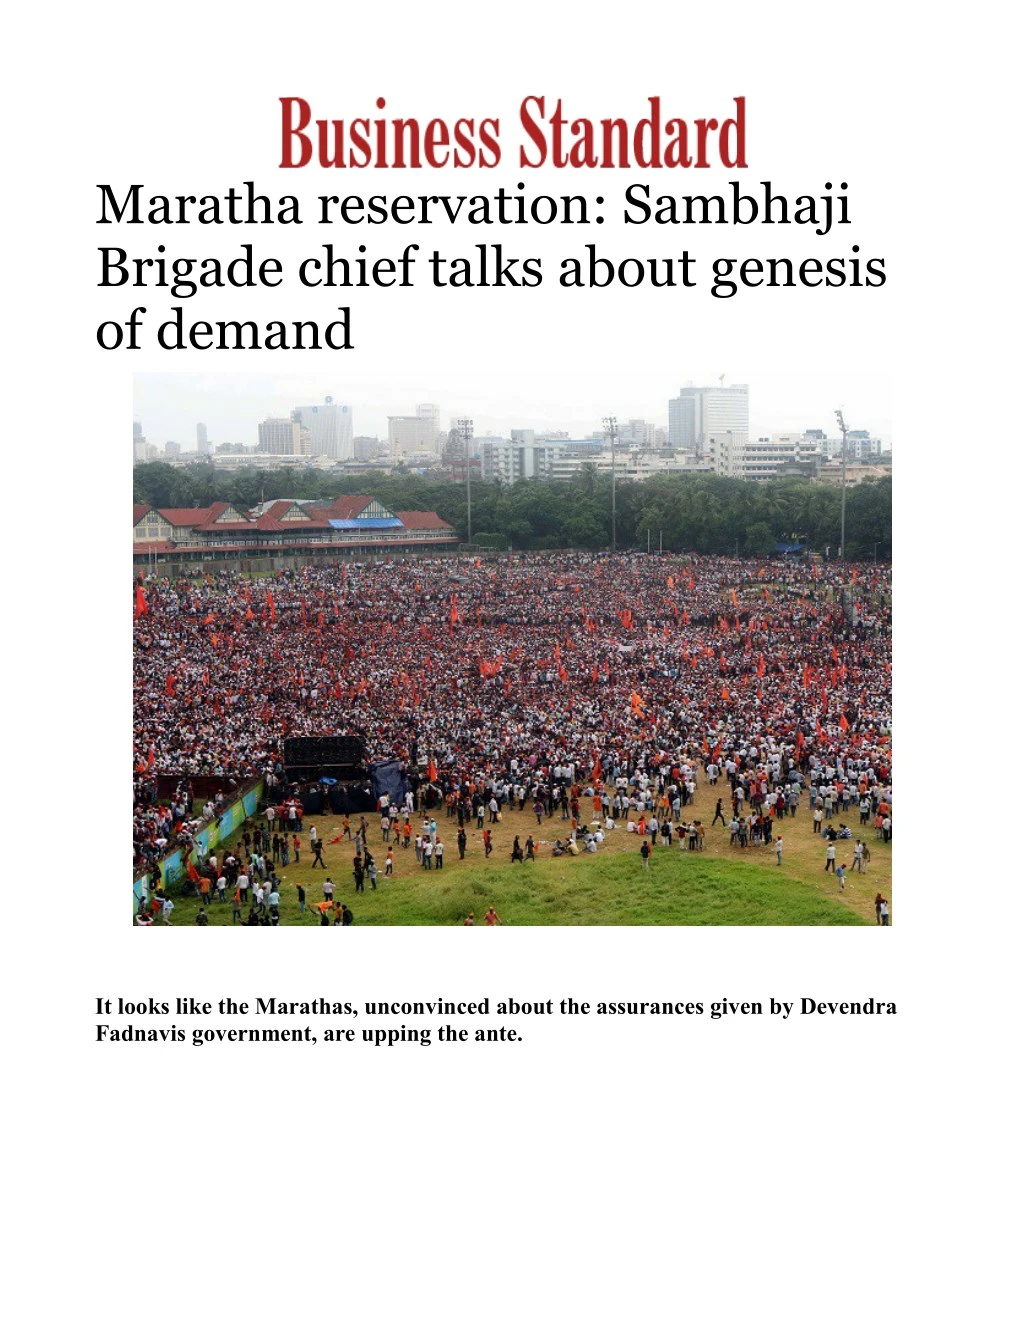 maratha reservation sambhaji brigade chief talks